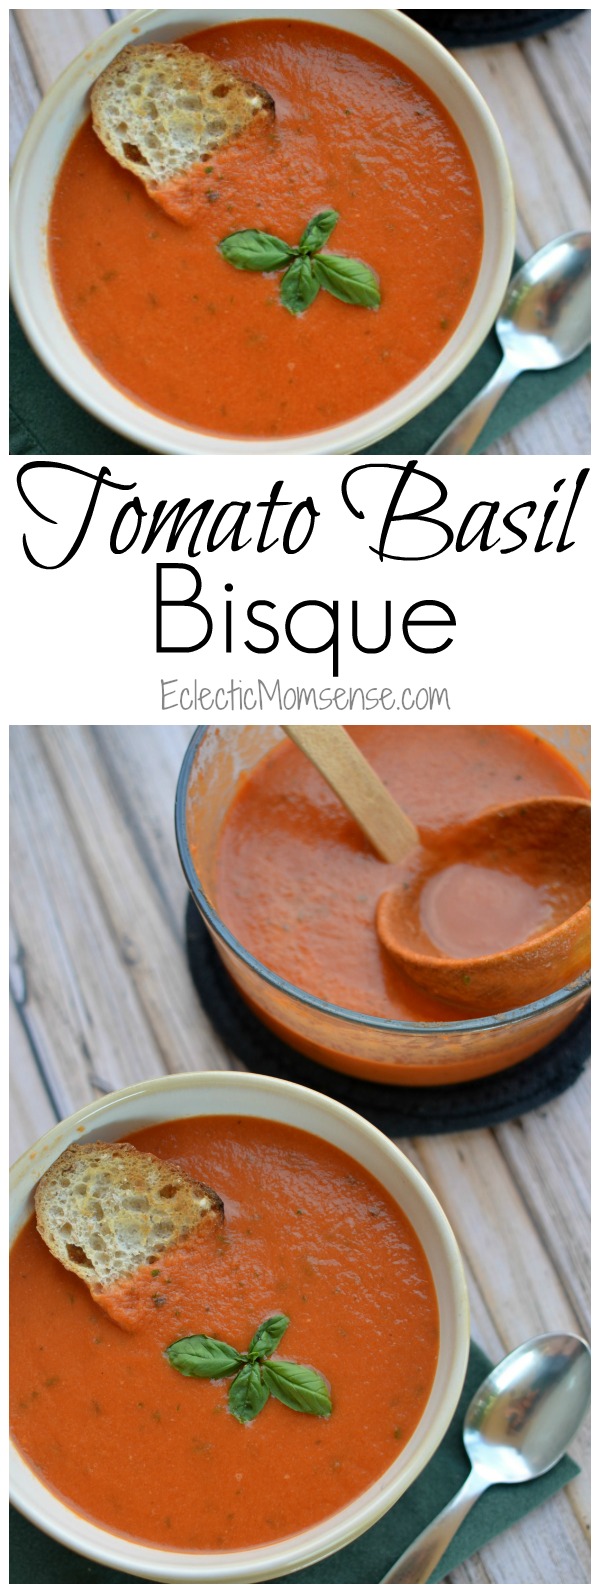 Tomato Basil Bisque - Eclectic Momsense